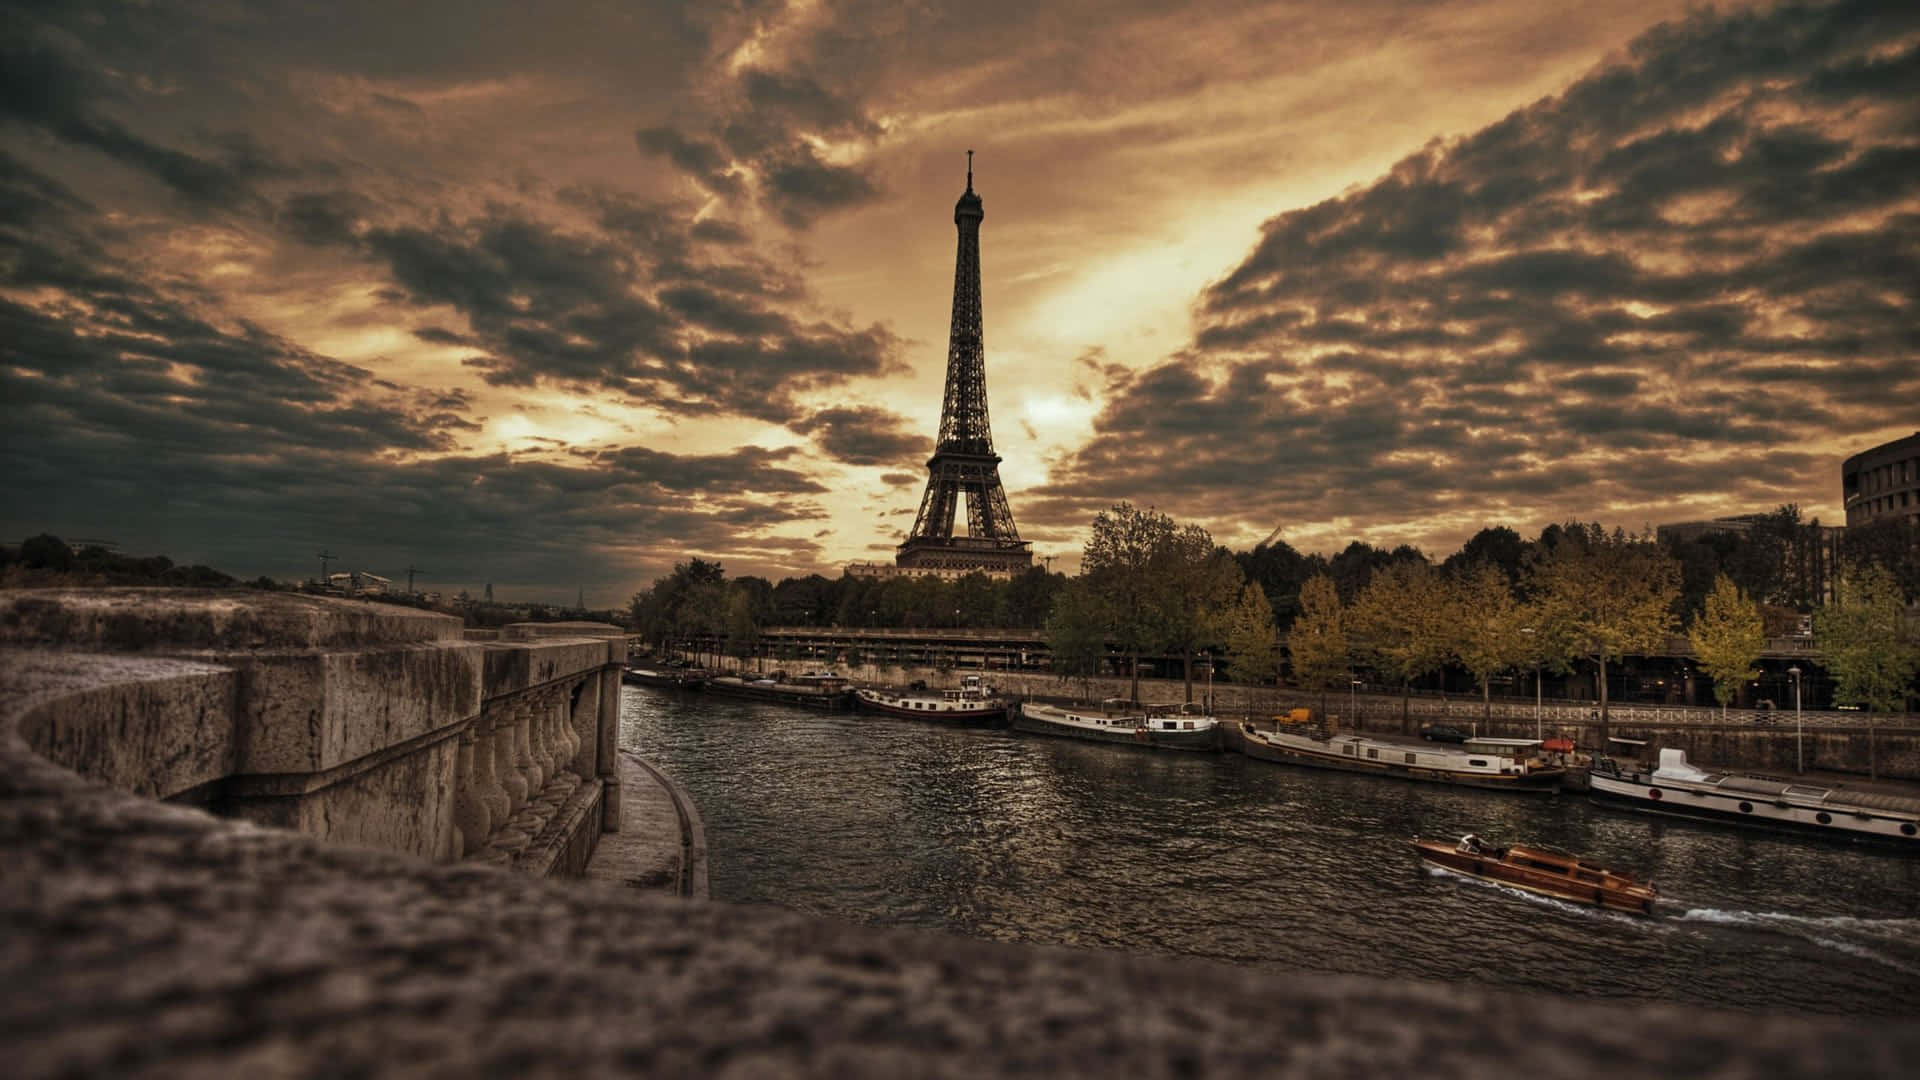 The beauty of Paris, France